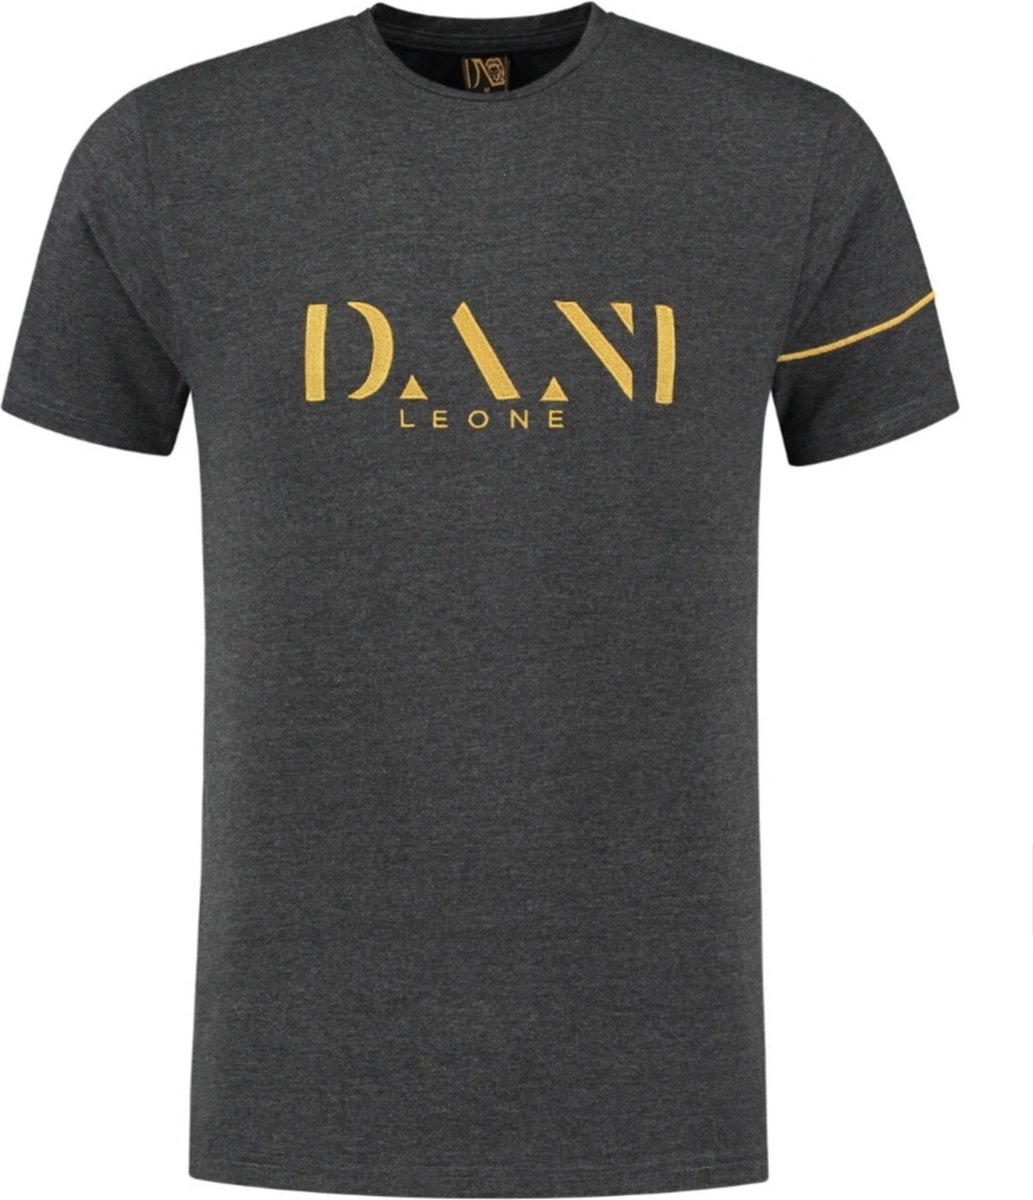 Dani leone t-shirt gold edition (XXL) grey